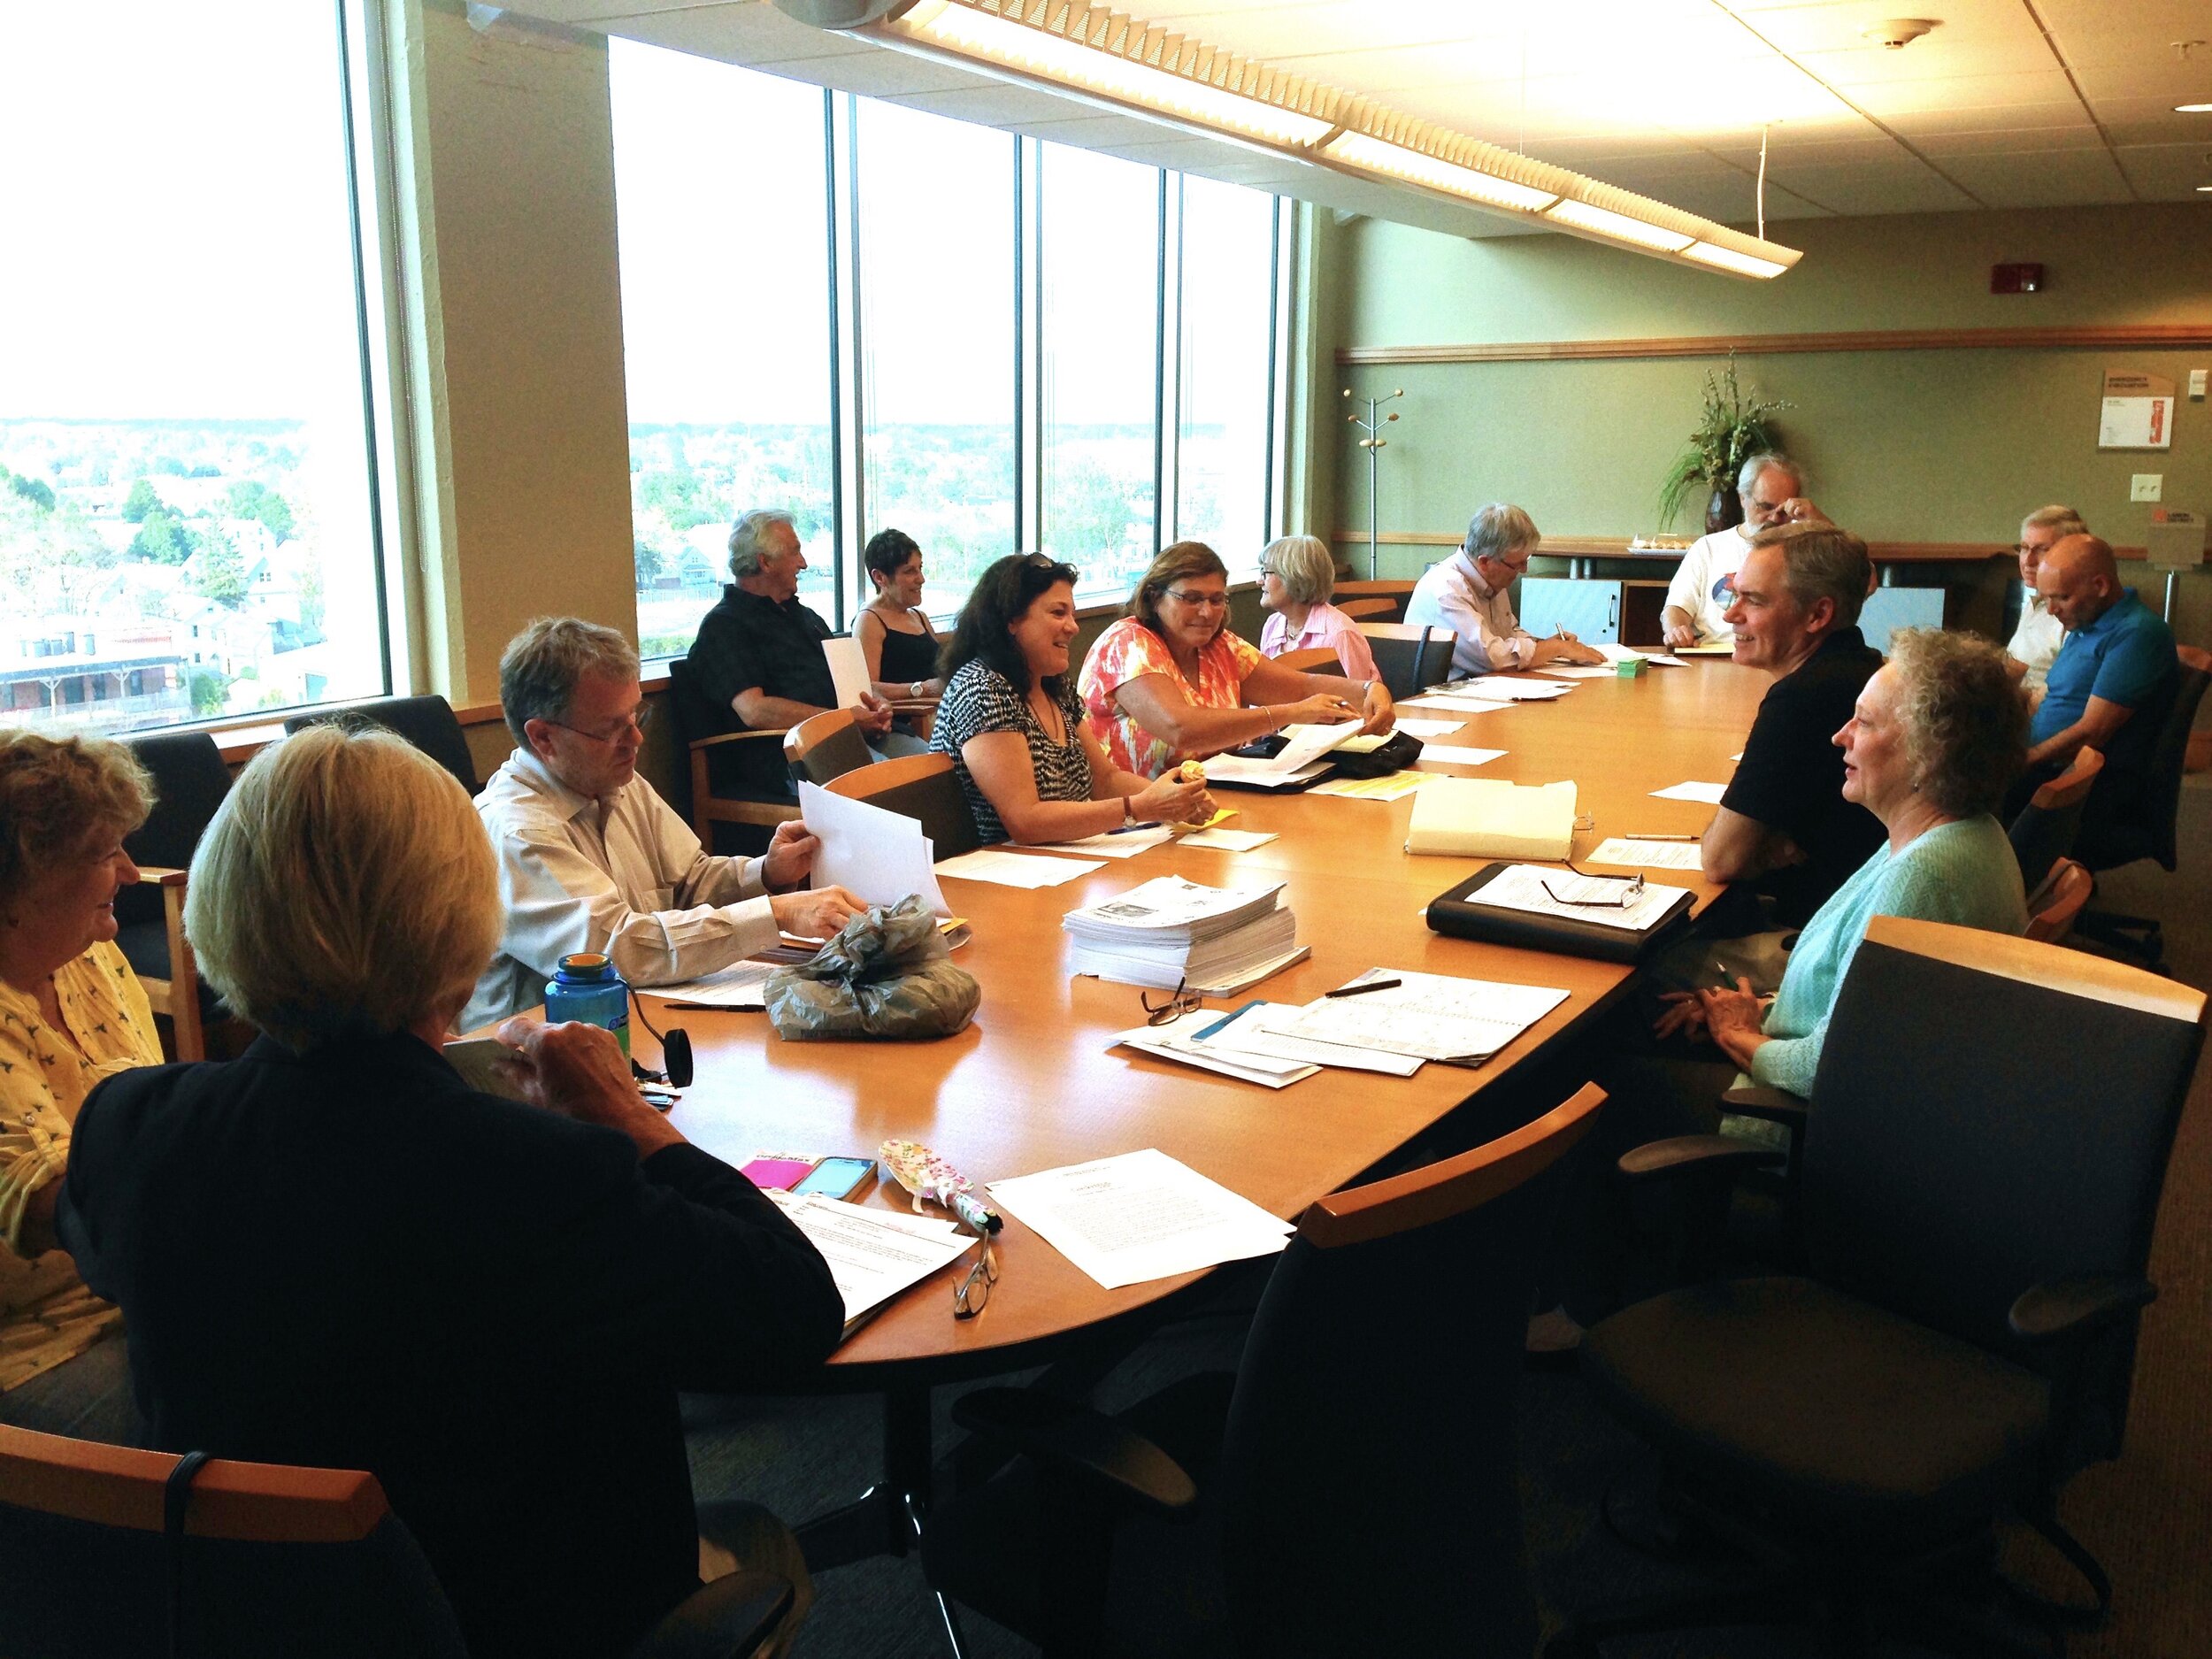 Board meeting at the Larkin Center